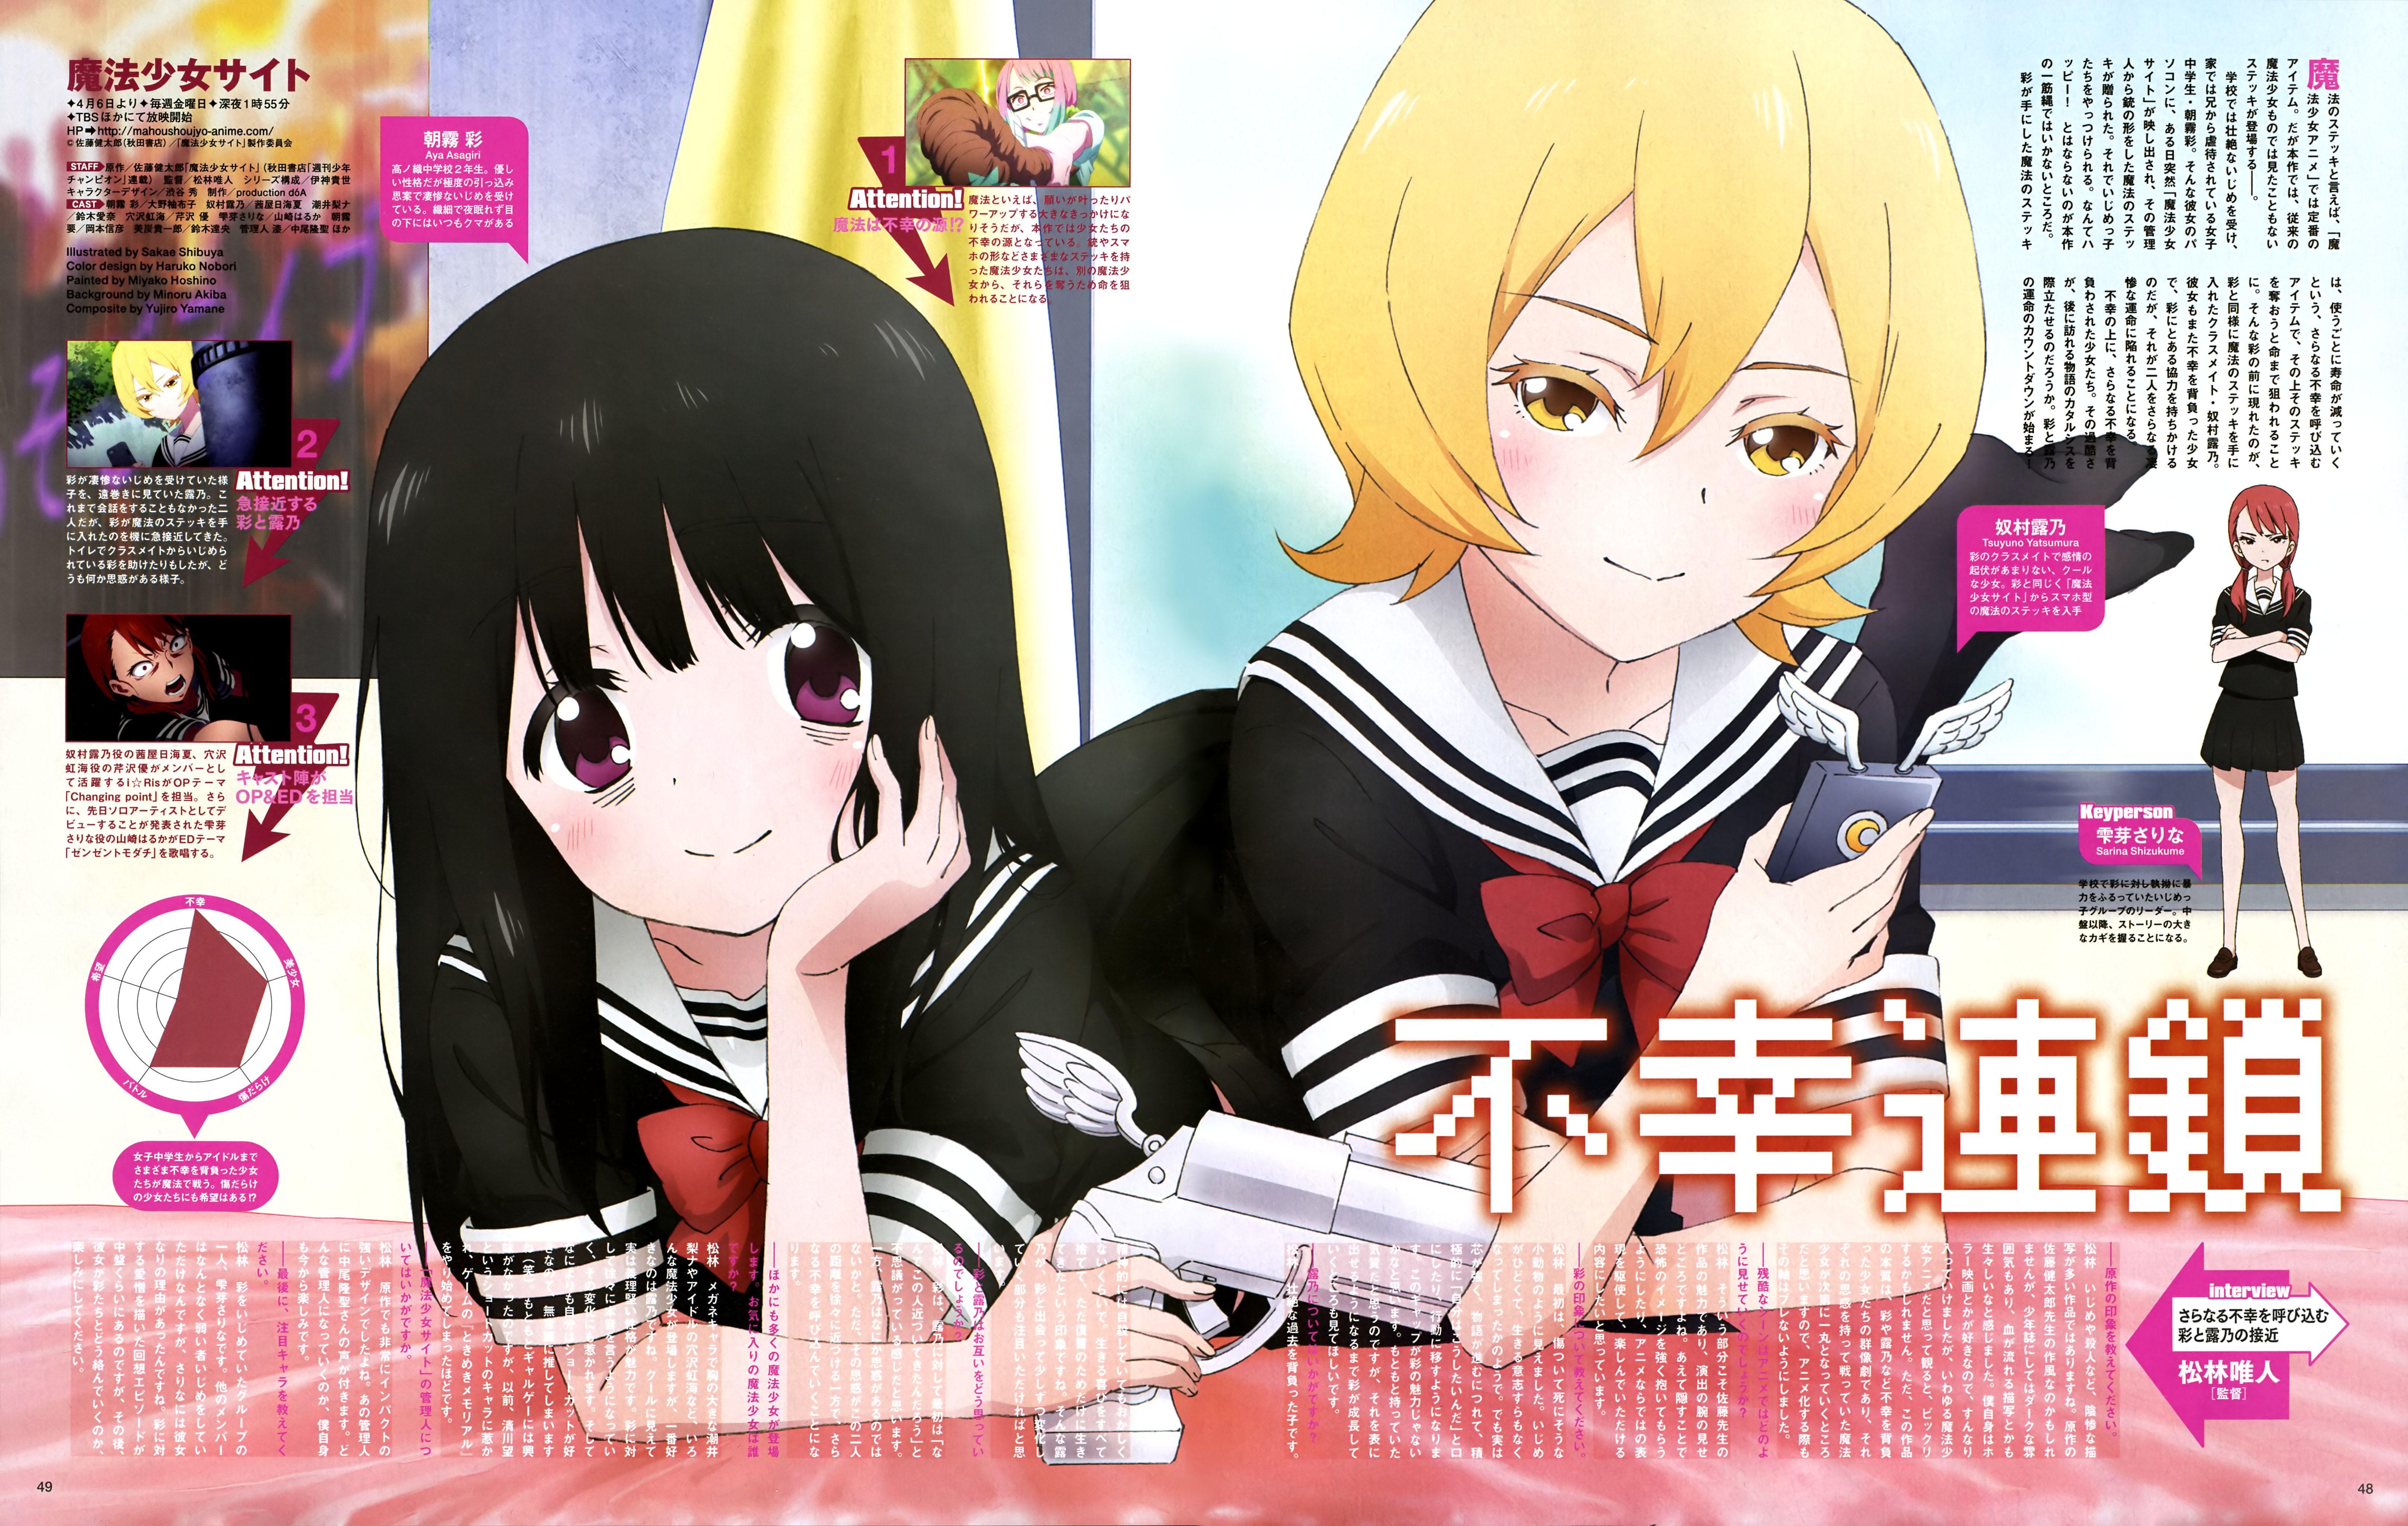 Mahou Shoujo Site Wallpaper Discover more Anime, Magical Girl